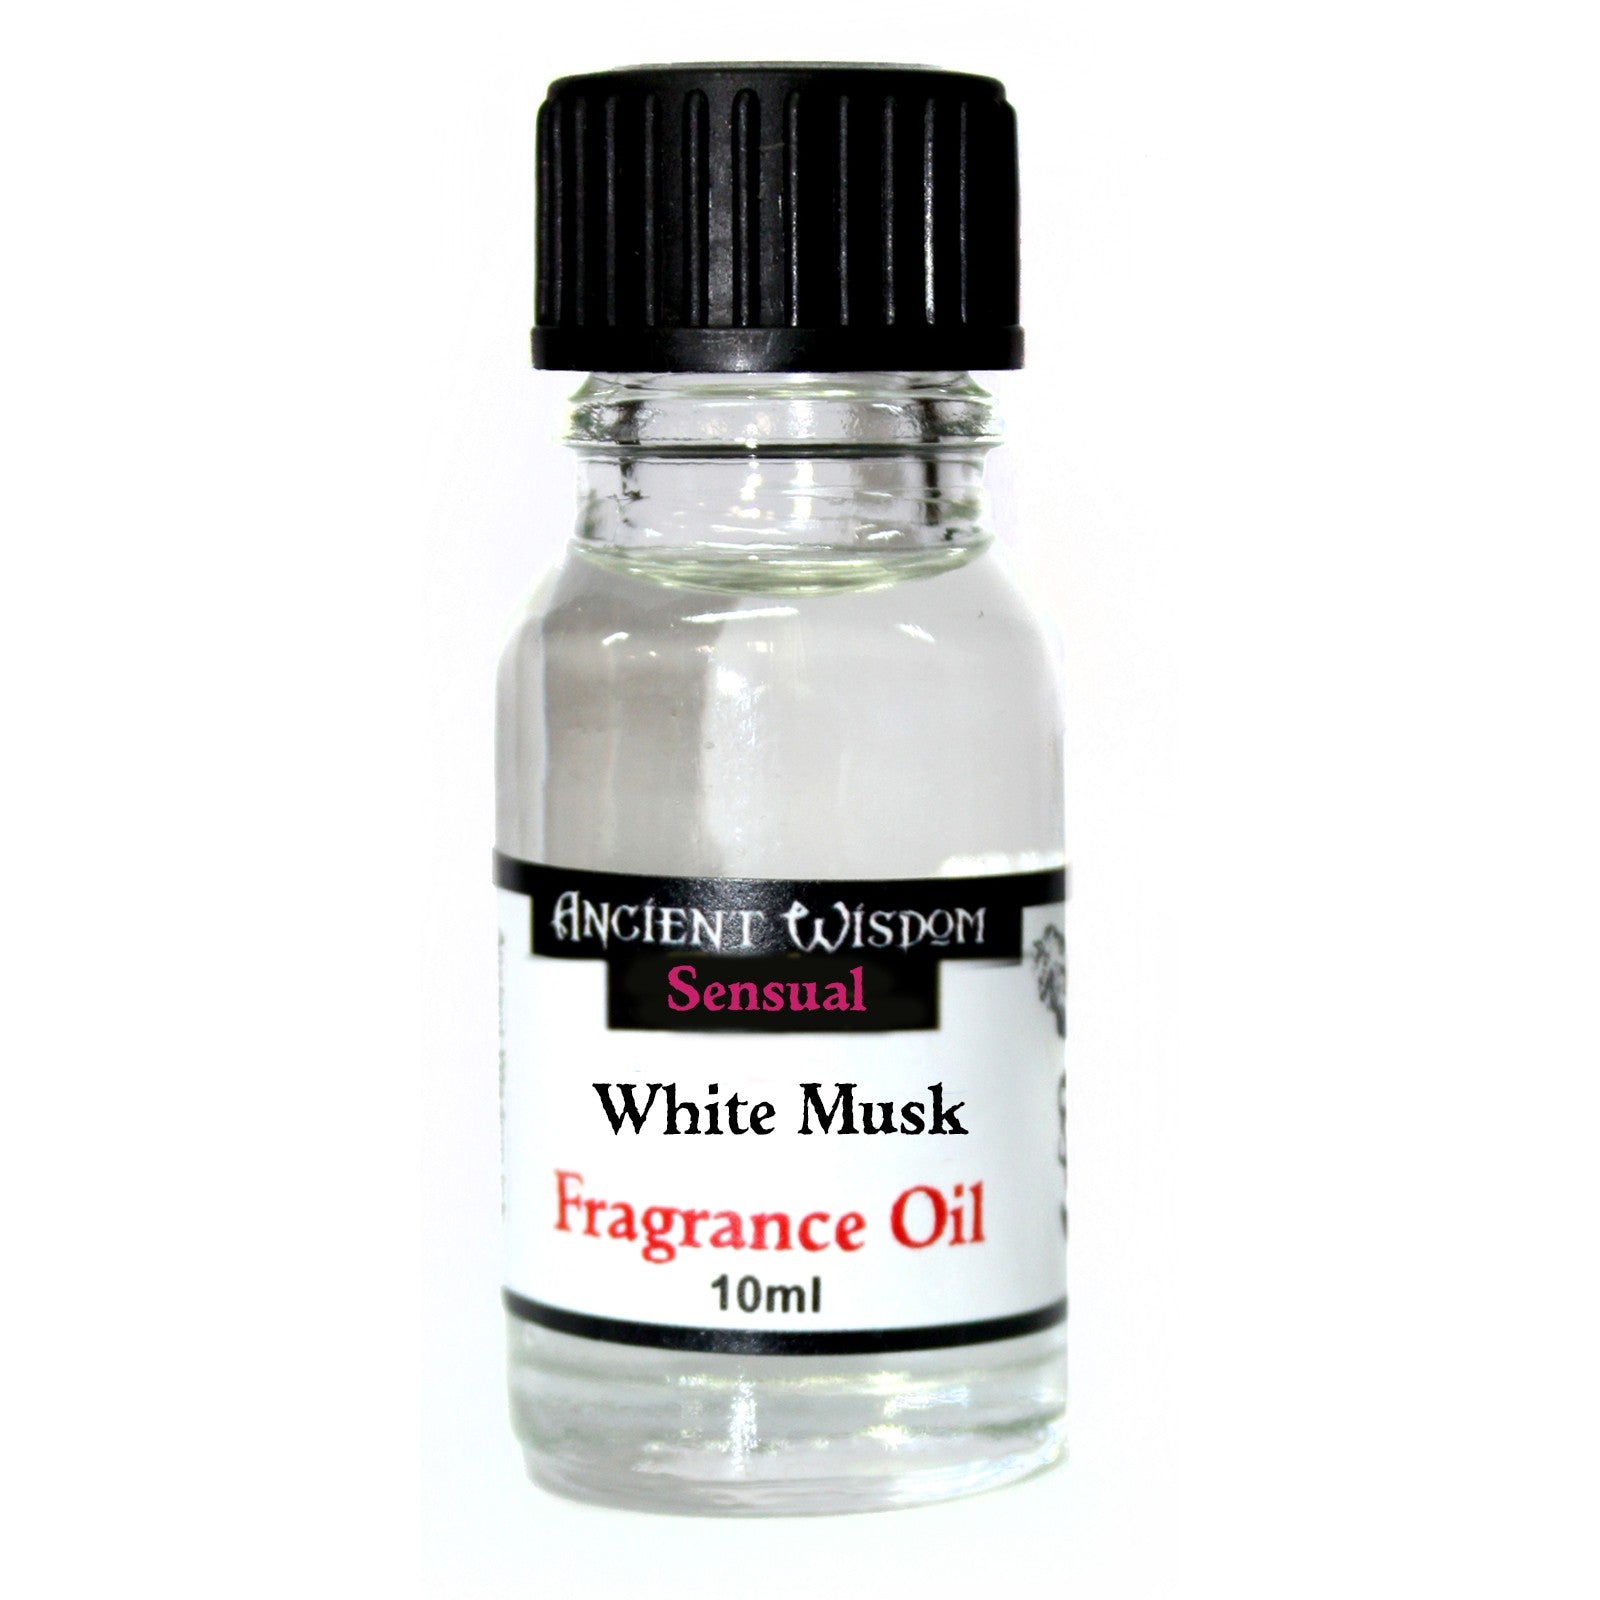 View 10ml White Musk Fragrance Oil information